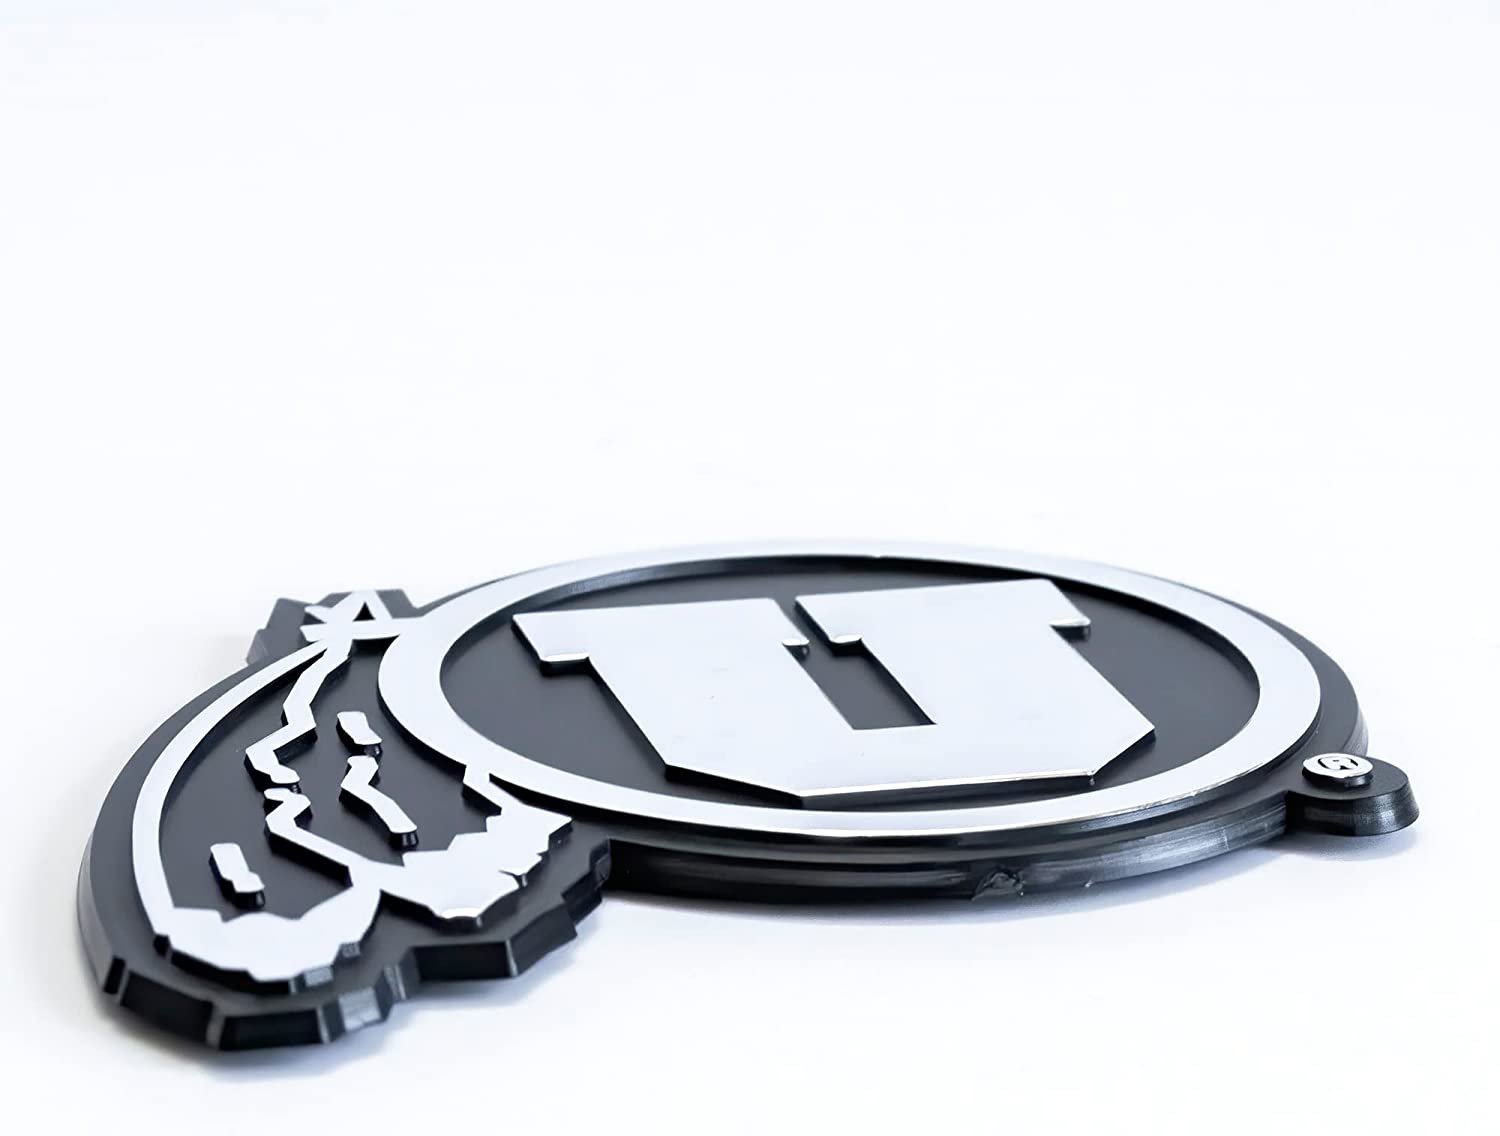 University of Texas Longhorns Auto Emblem, Silver Chrome Color, Raised Molded Plastic, Adhesive Tape Backing